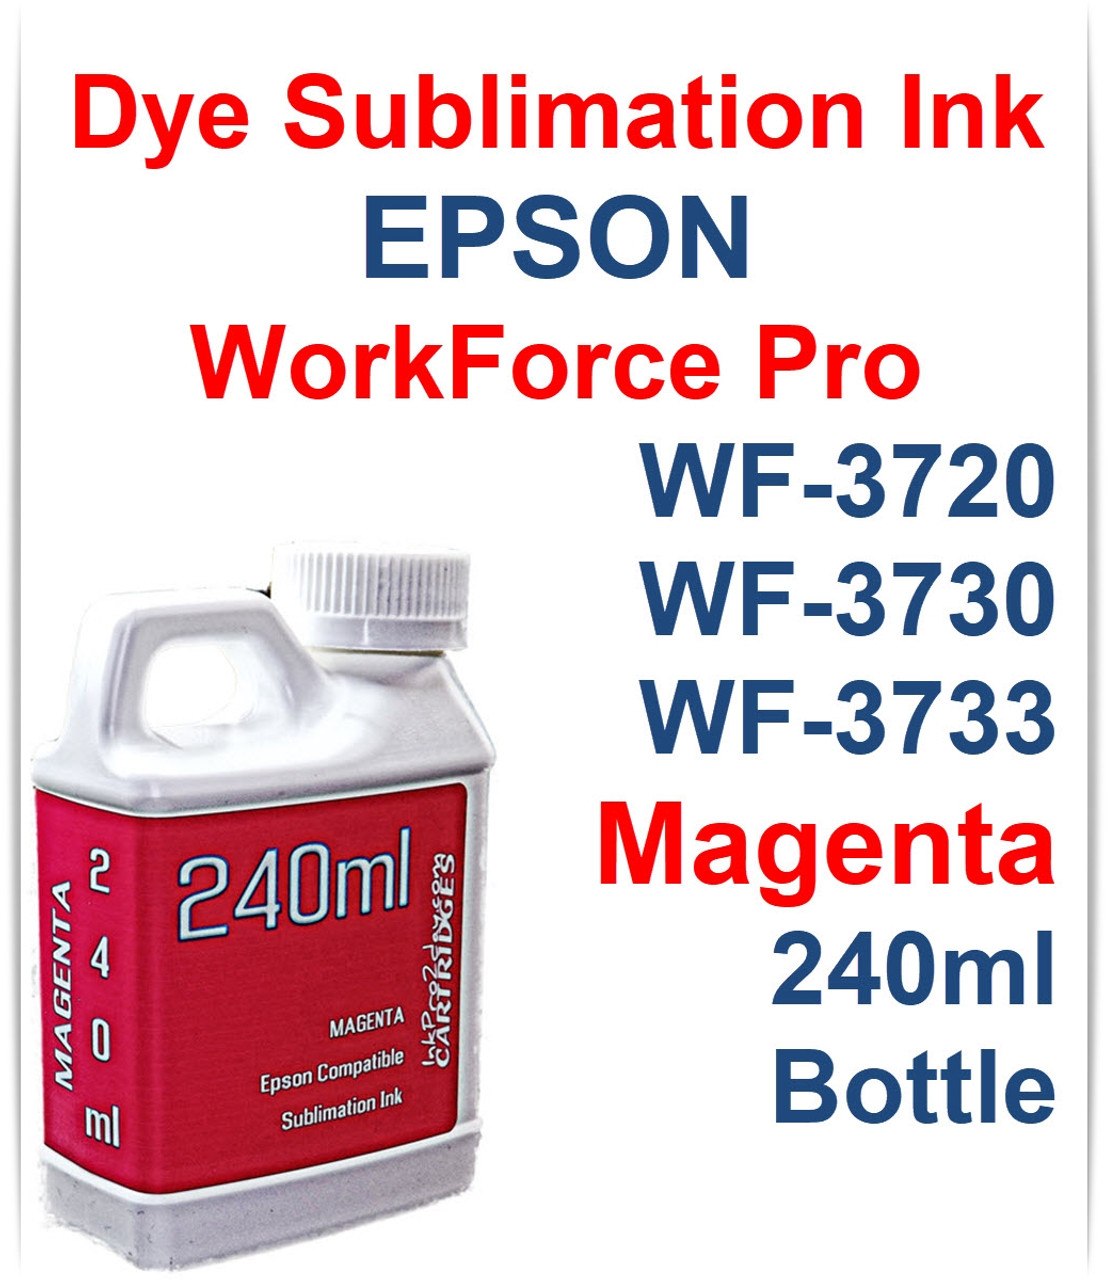 Magenta 240ml bottle Dye Sublimation Ink for Epson WorkForce Pro WF-3720 WF-3730 WF-3733 Printers